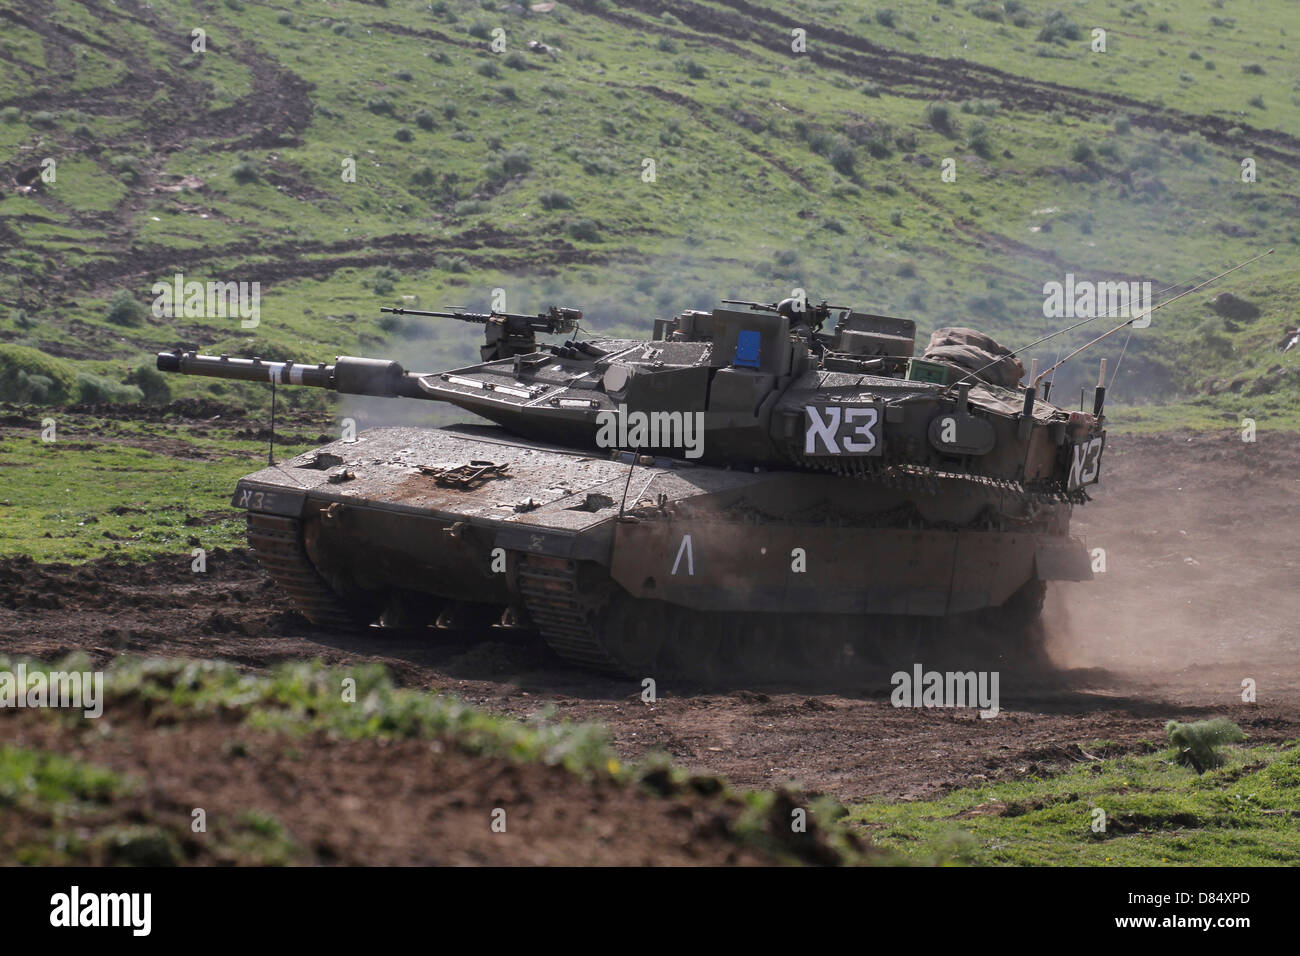 An Israel Defense Force Merkava Mark IV main battle tank. Stock Photo